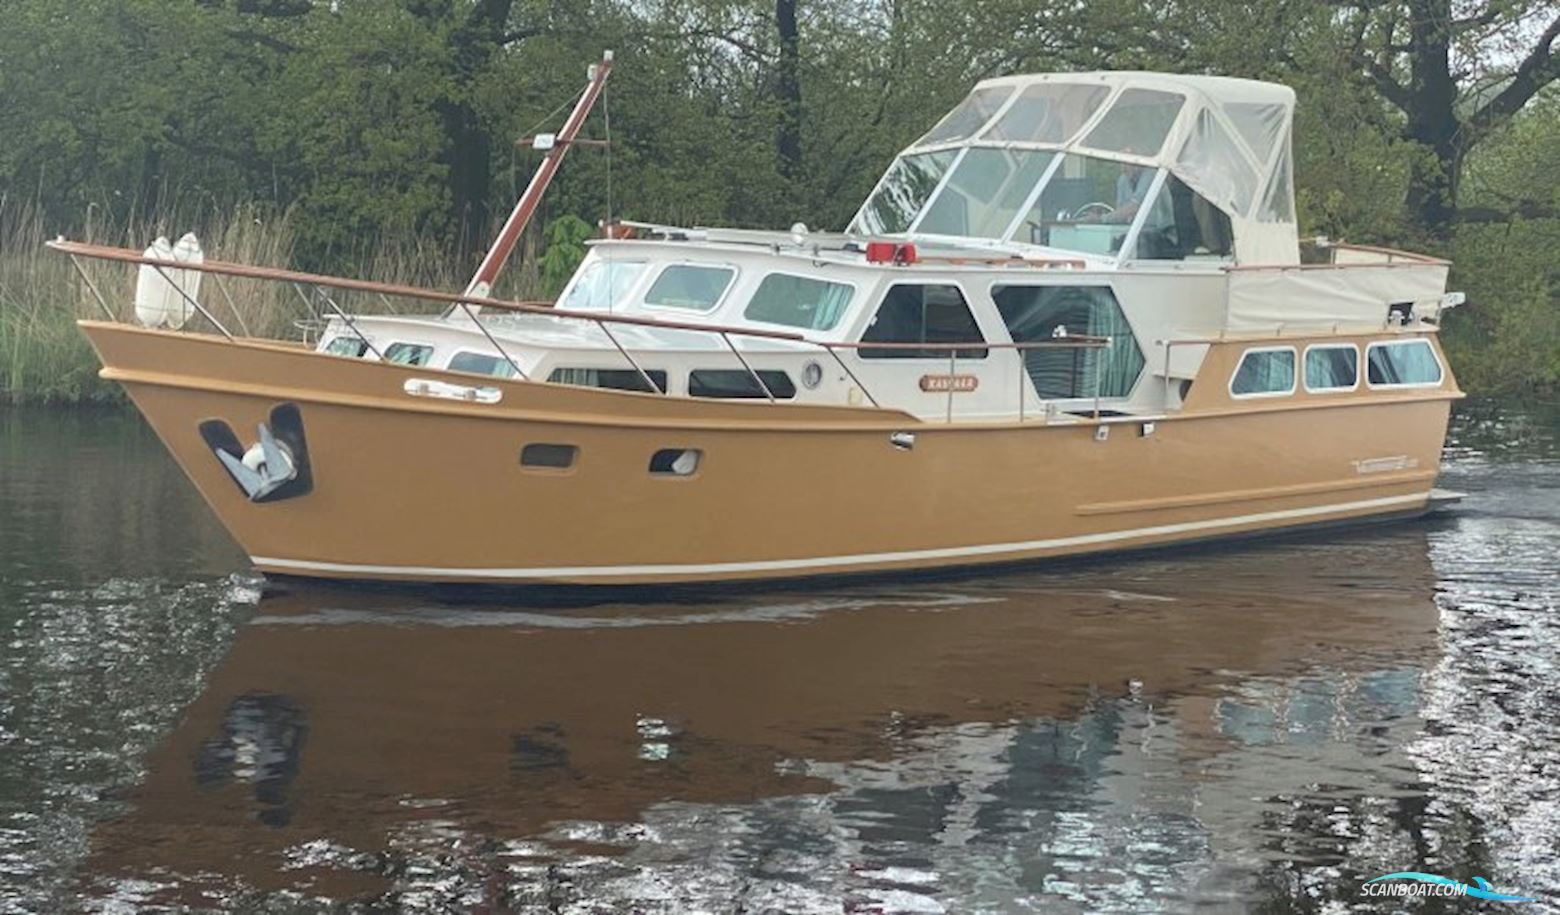 Valkkruiser 1350 Motorbåd 1977, med Daf motor, Holland